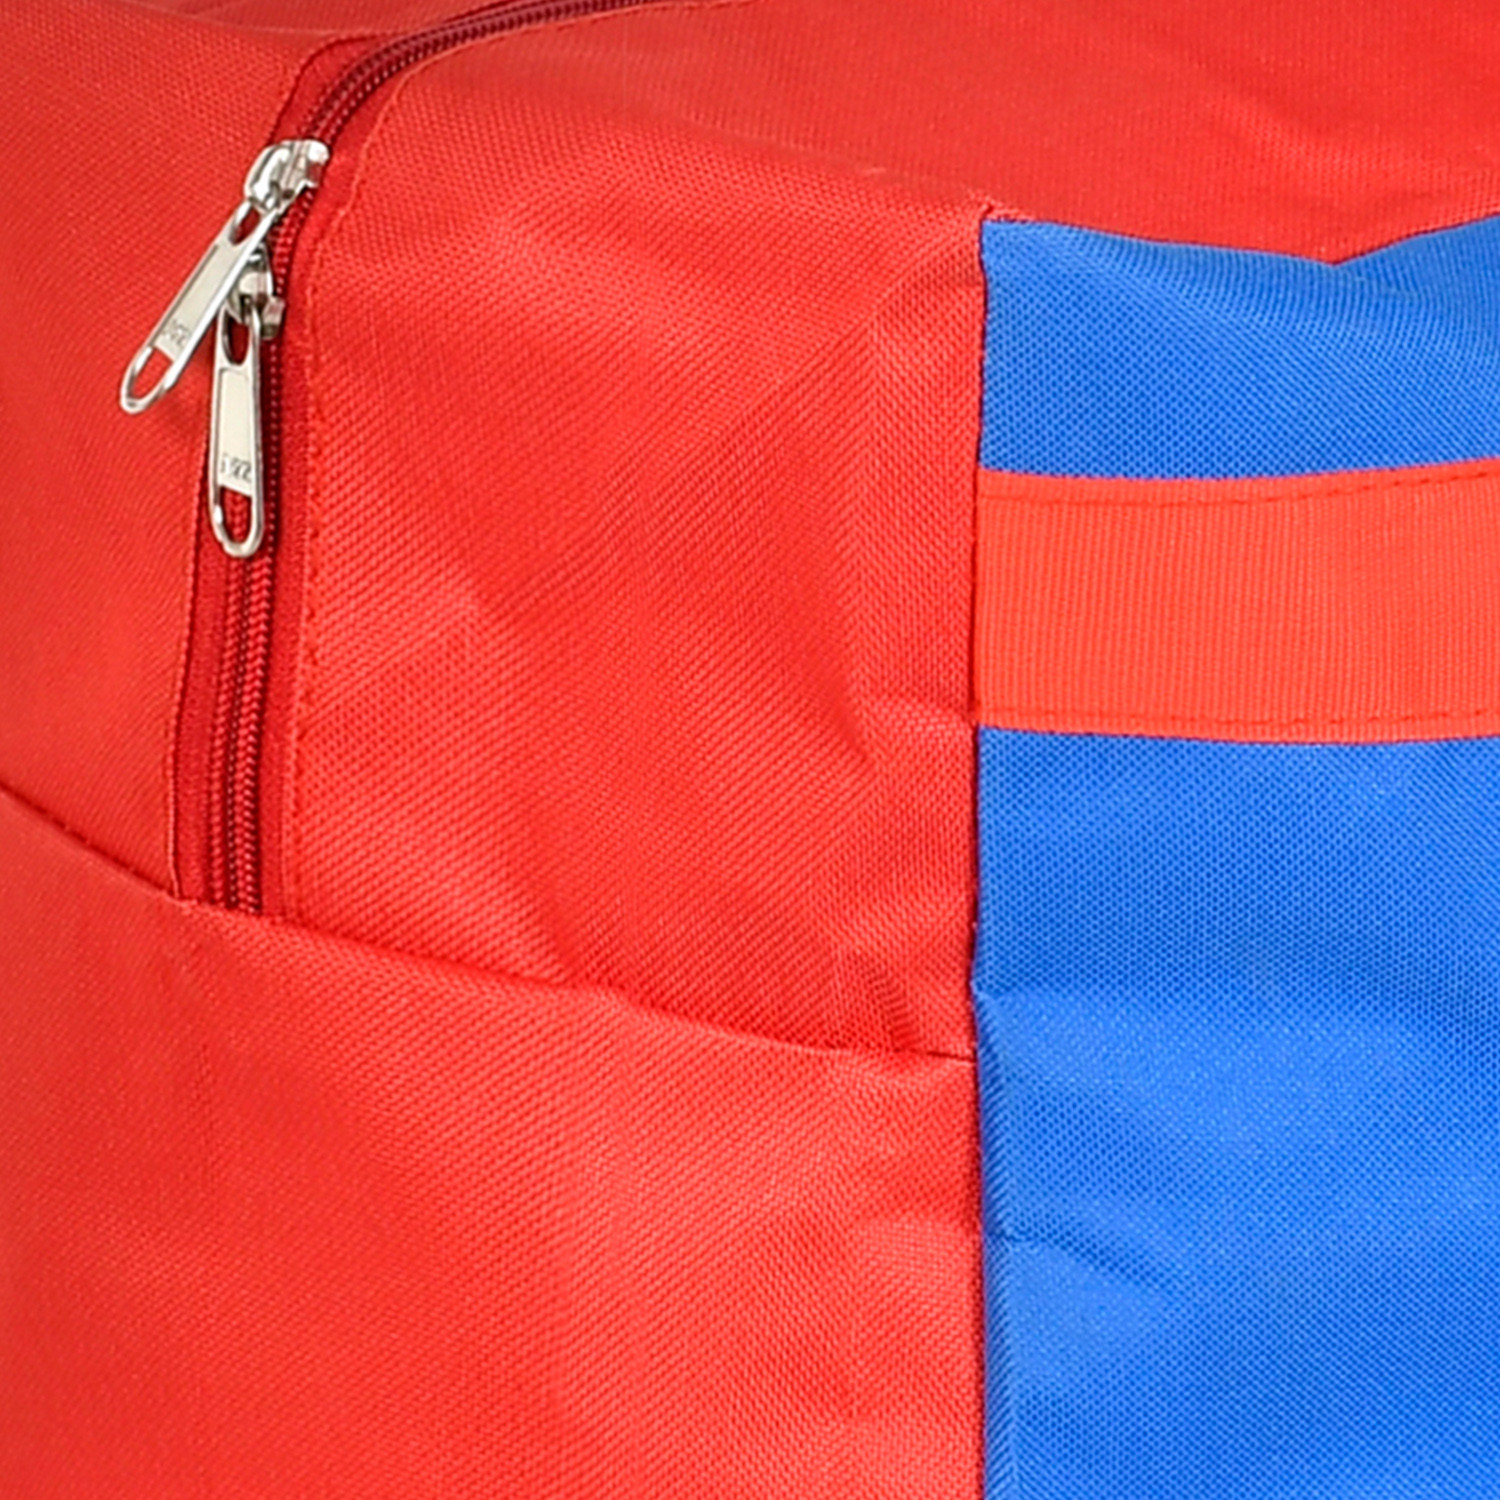 Kuber Industries Rexine Foldable Travel Duffle Bag, Storage Bag, Wardrobe organizer For Traveling (Blue) 54KM4218